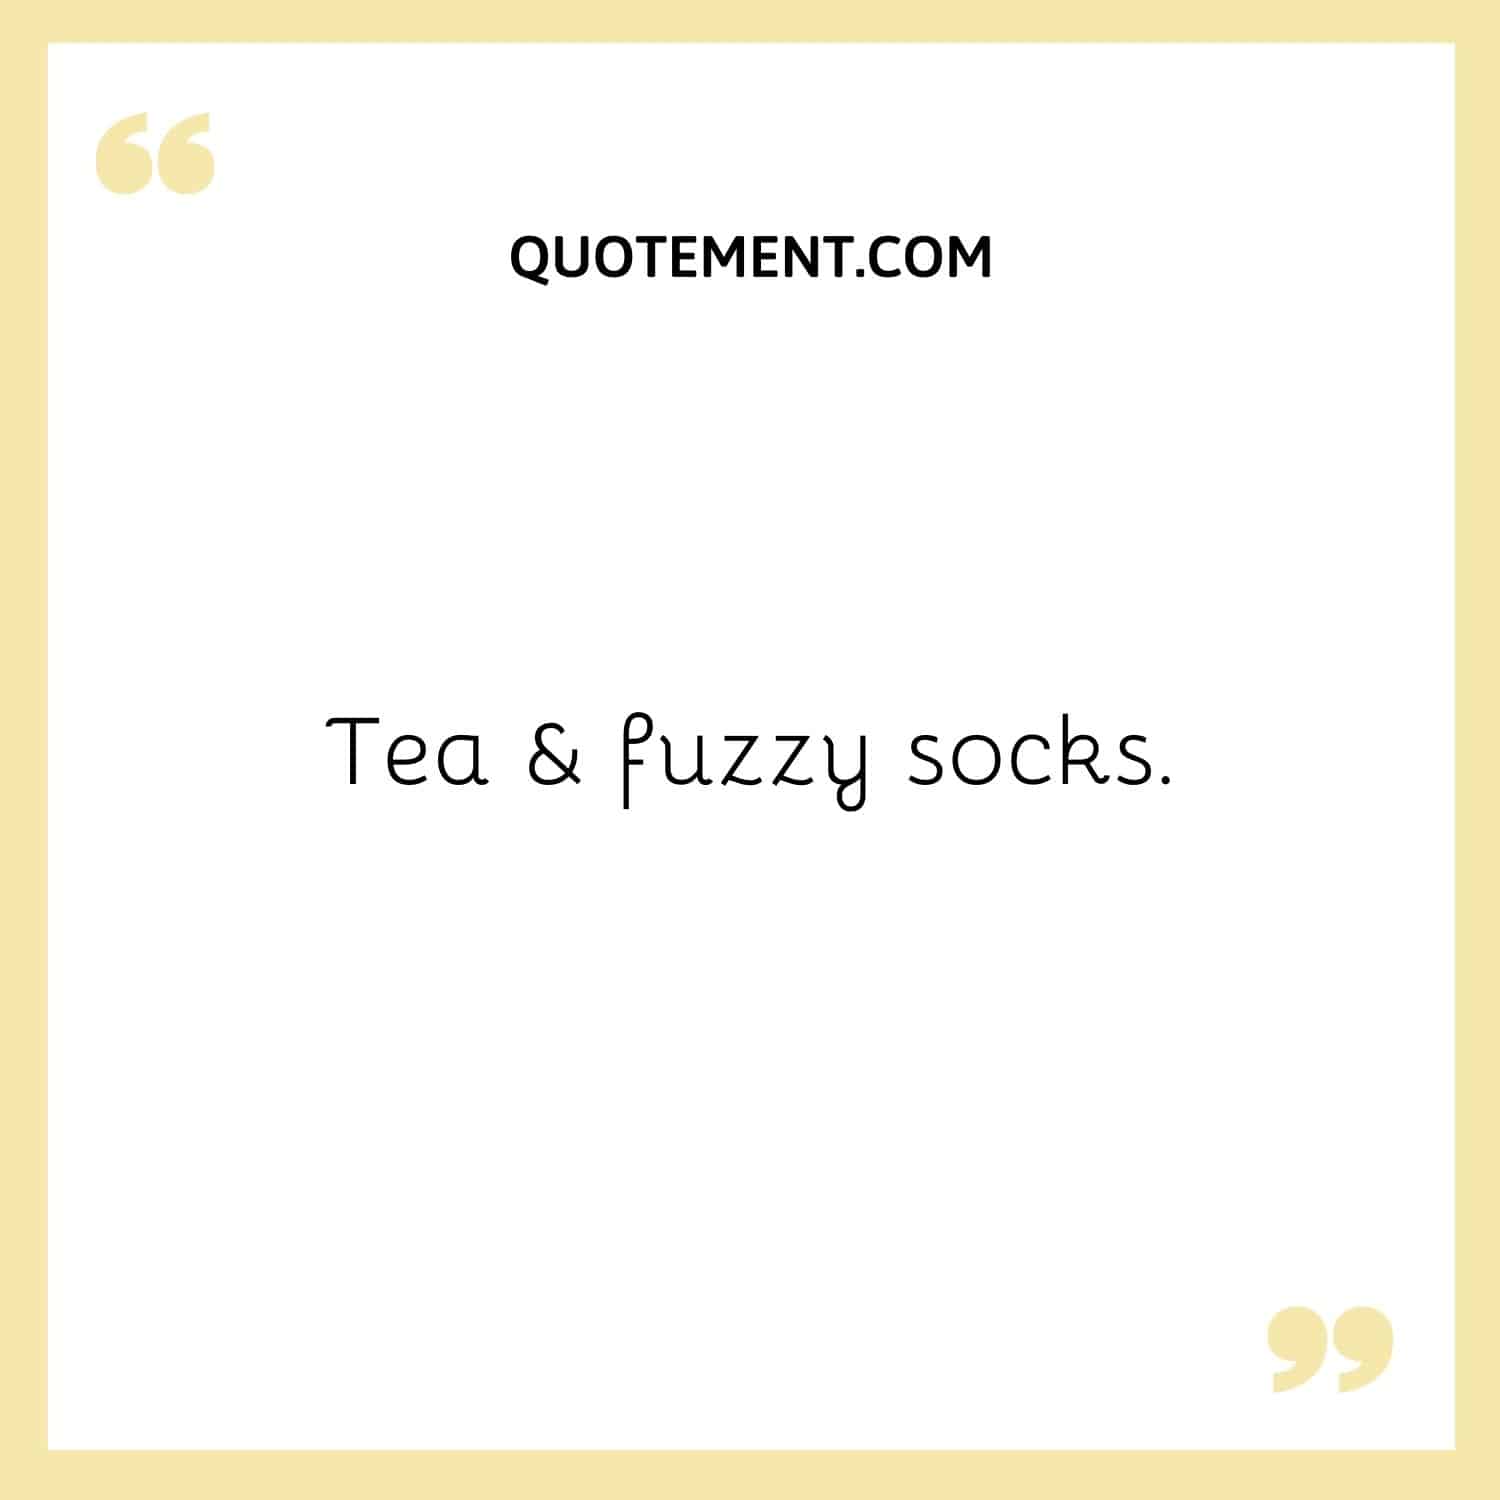 Tea & fuzzy socks.